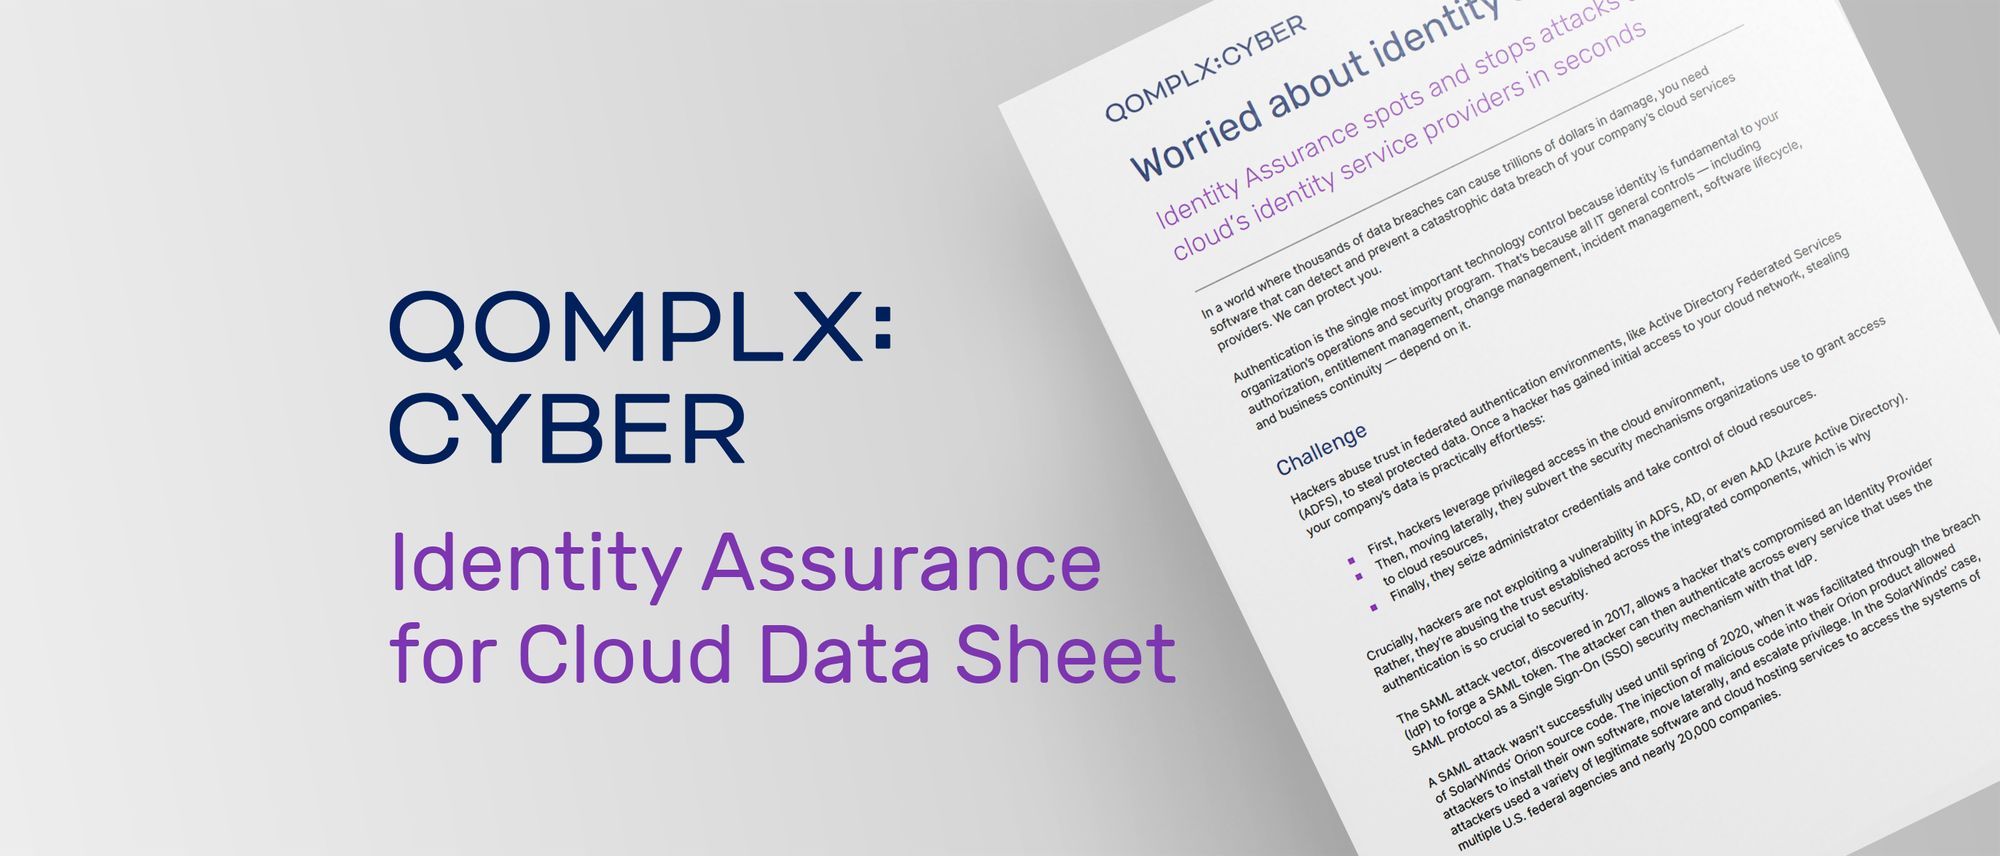 QOMPLX:CYBER Identity Assurance for Cloud Data Sheet